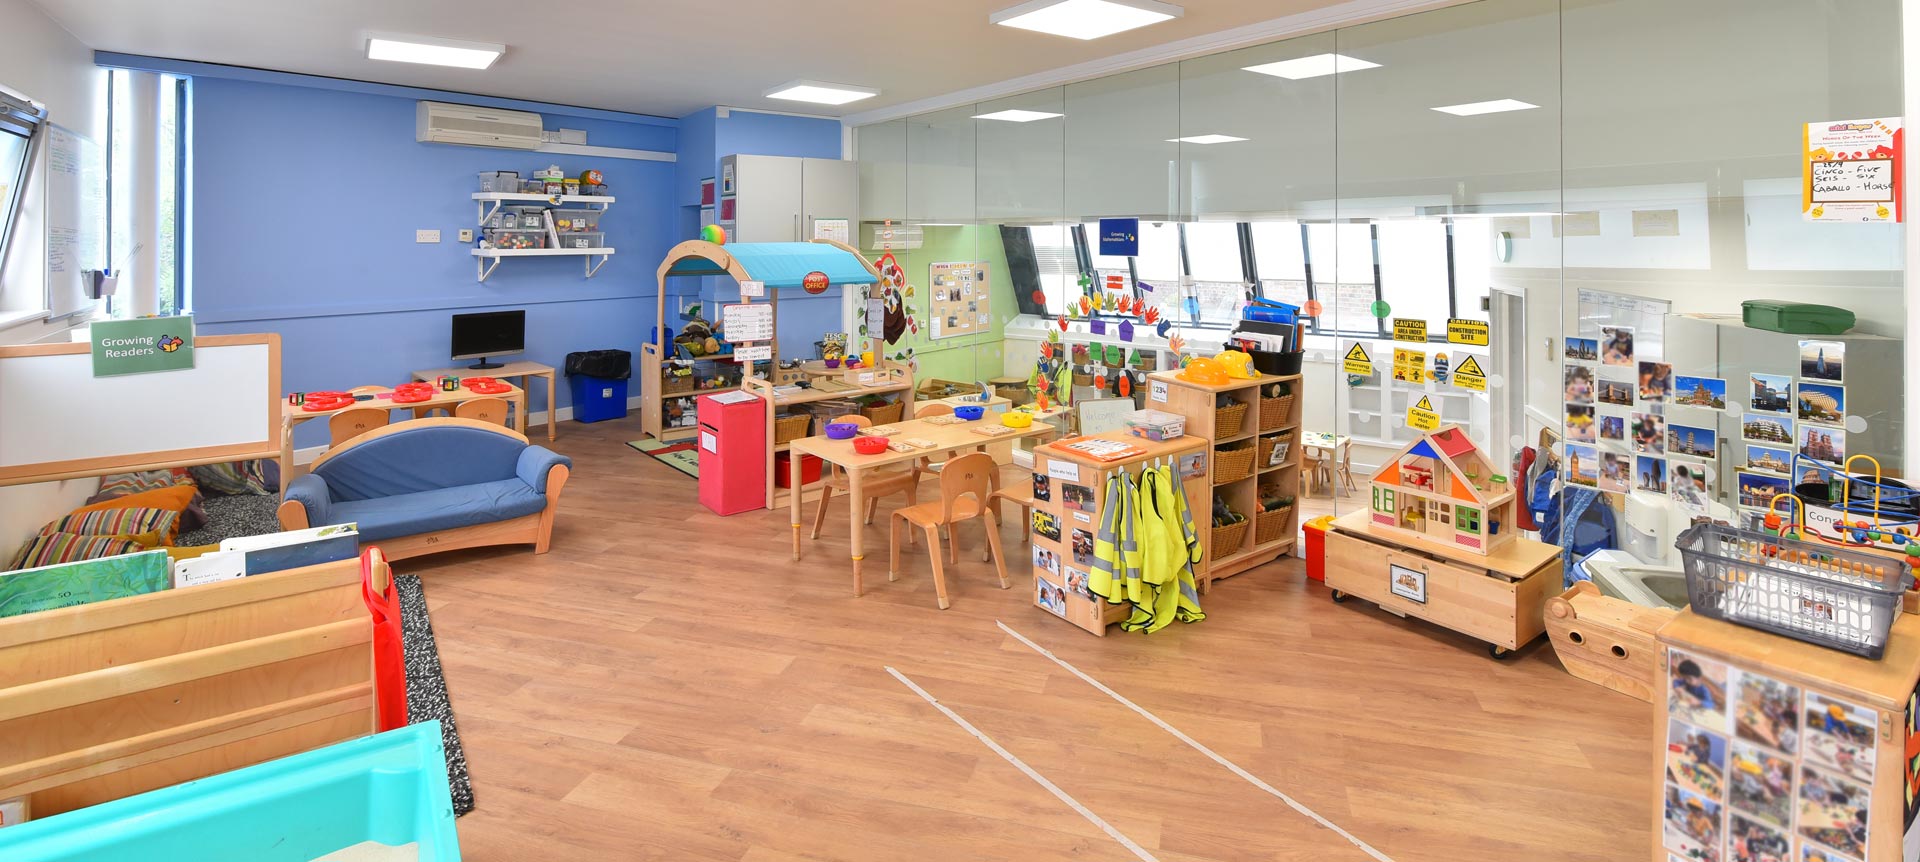 Whetstone Day Nursery and Preschool